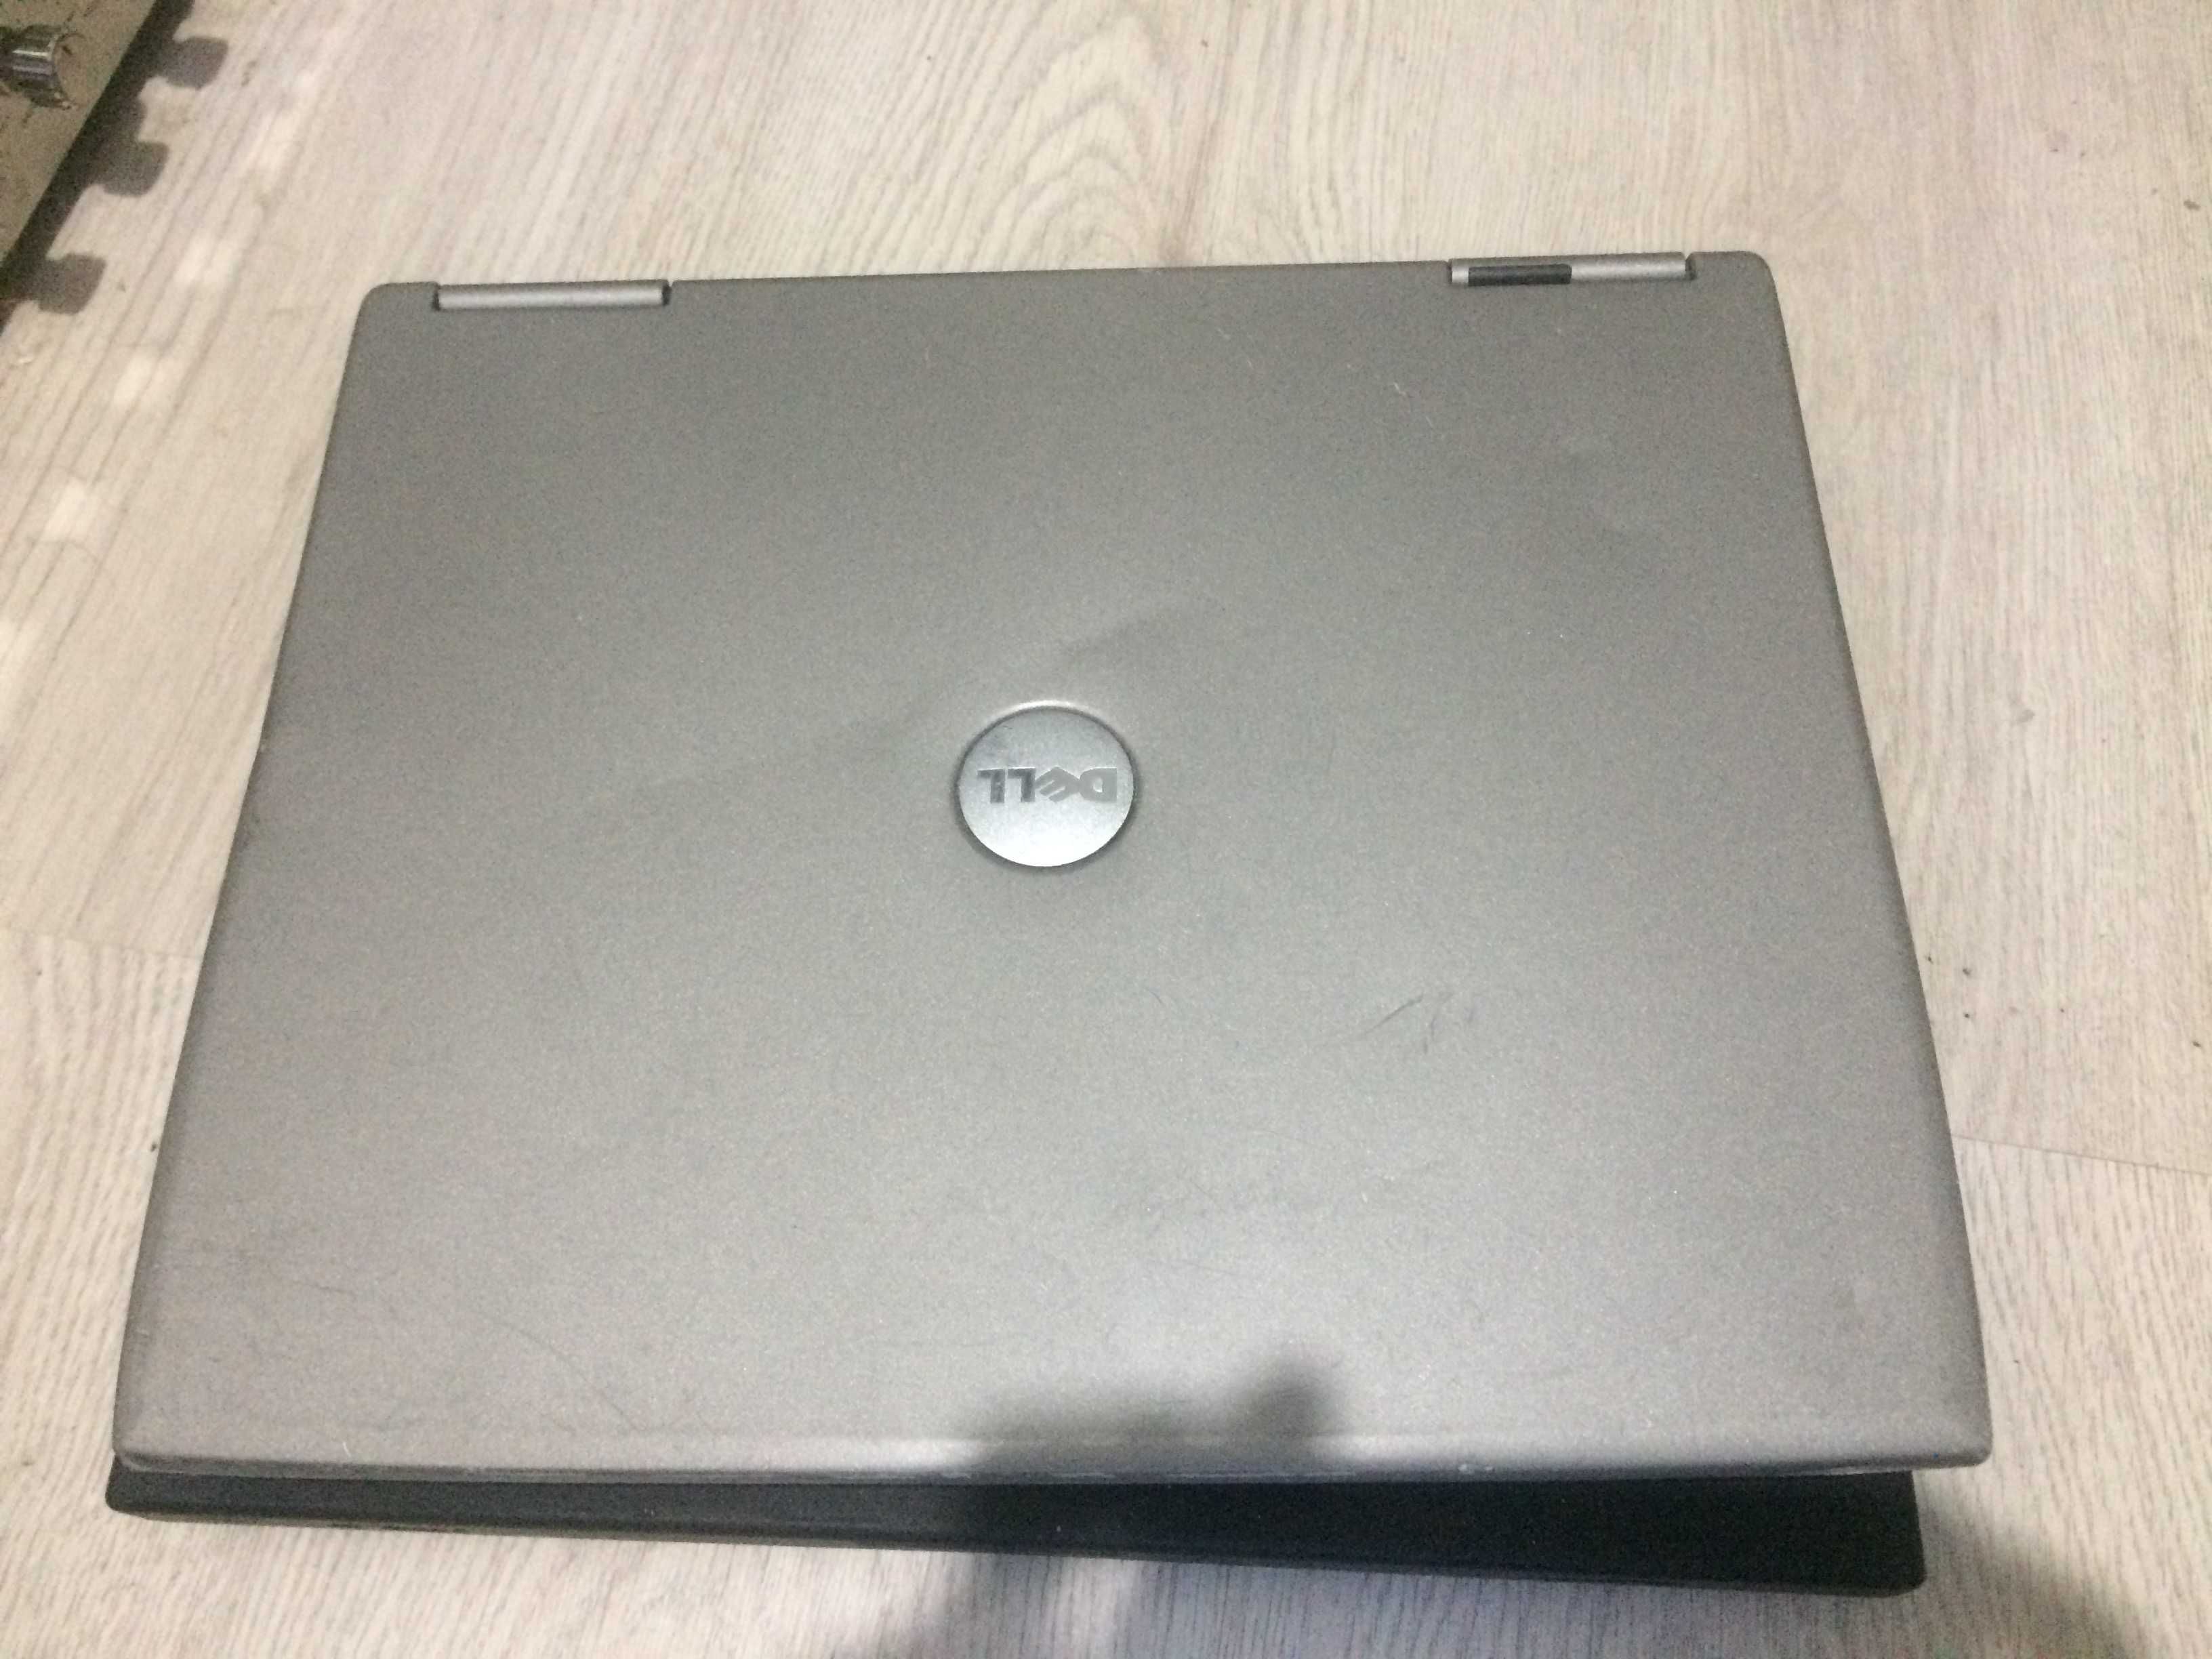 Laptop Dell IBM Toshiba Compaq Armada